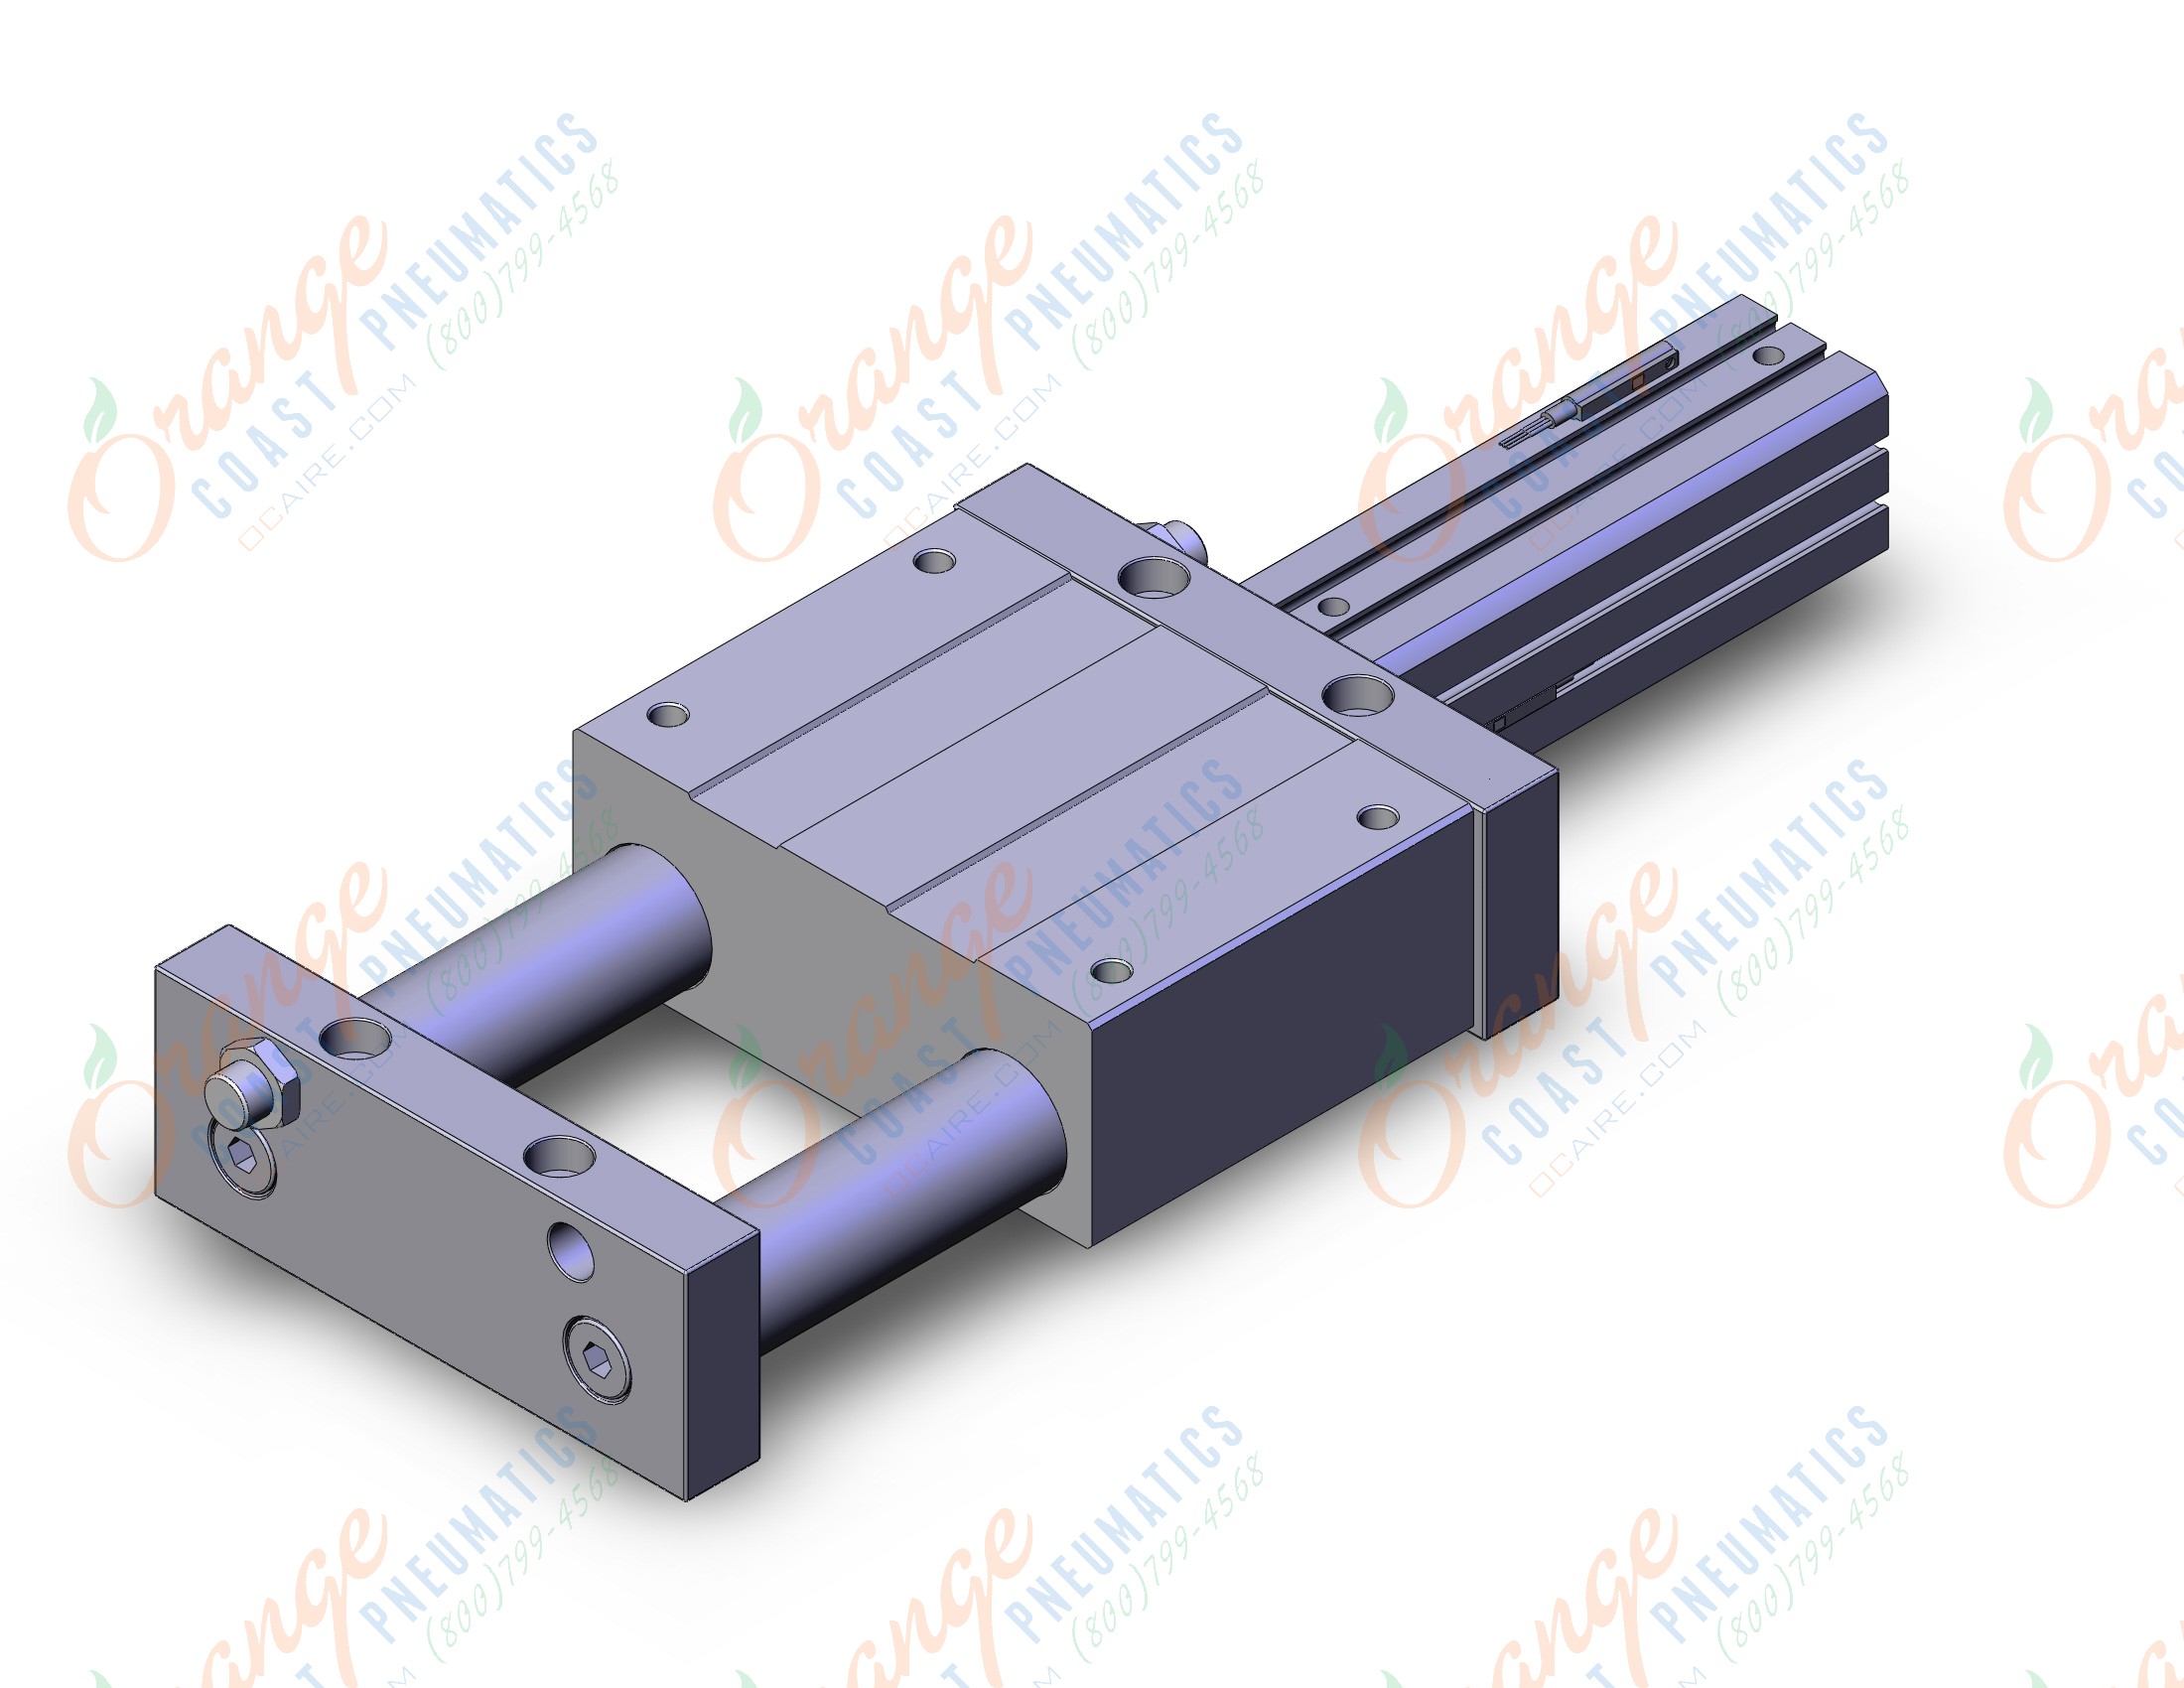 SMC CXTM20-75-M9PSAPC 20mm cxt slide bearing, CXT PLATFORM CYLINDER